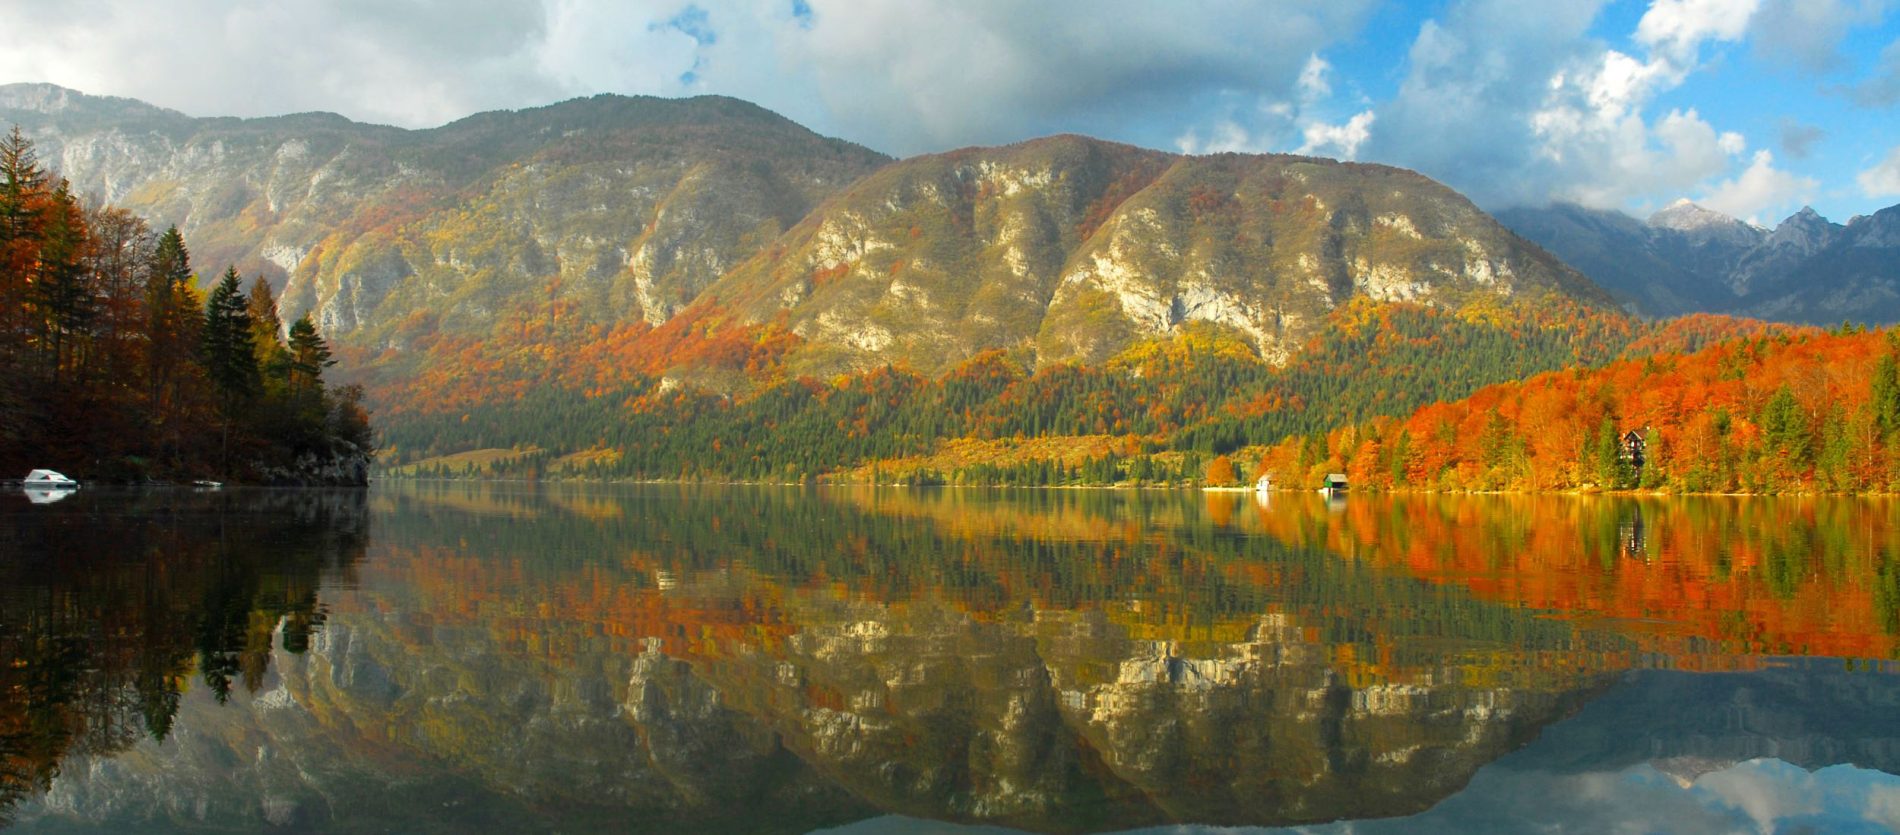 Discover the Alpine Beauty of Slovenia